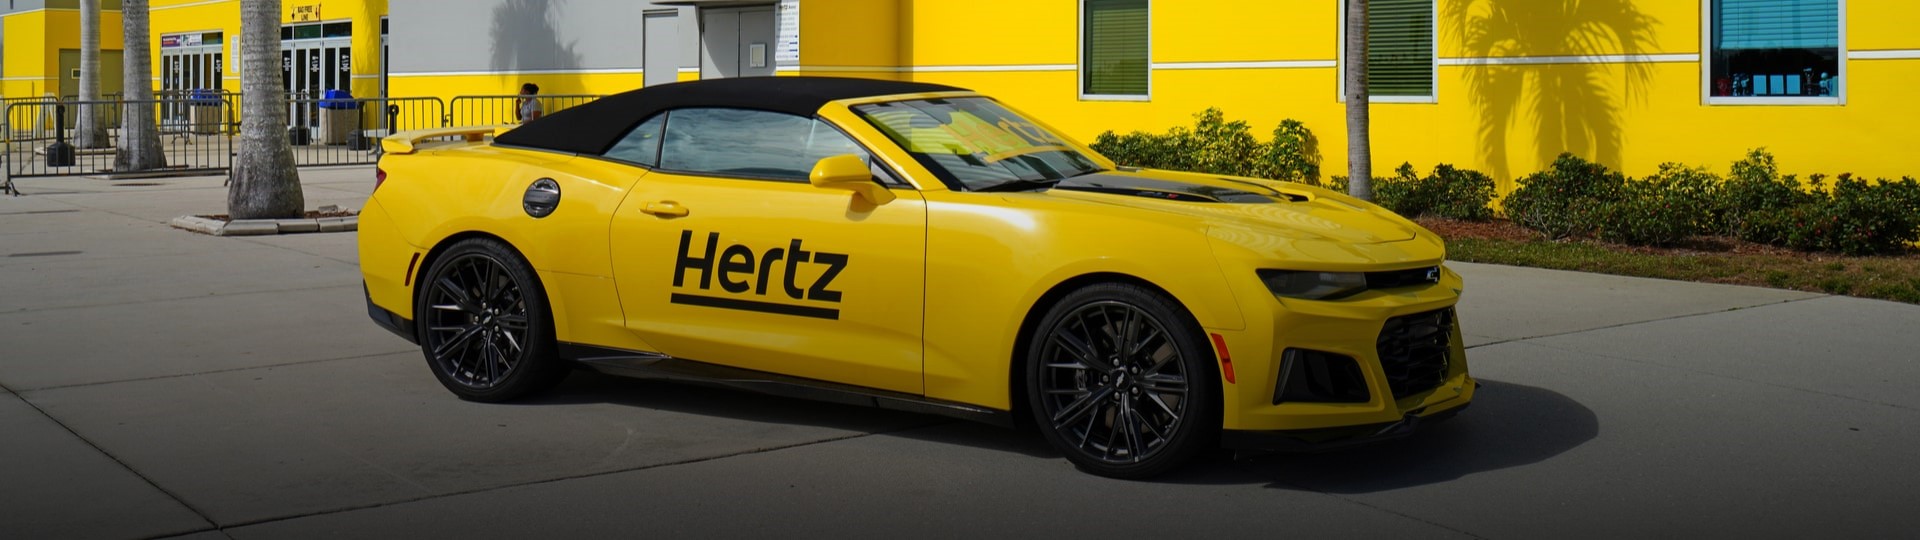 Po bankrotu se cena akcií Hertz zdvojnásobila